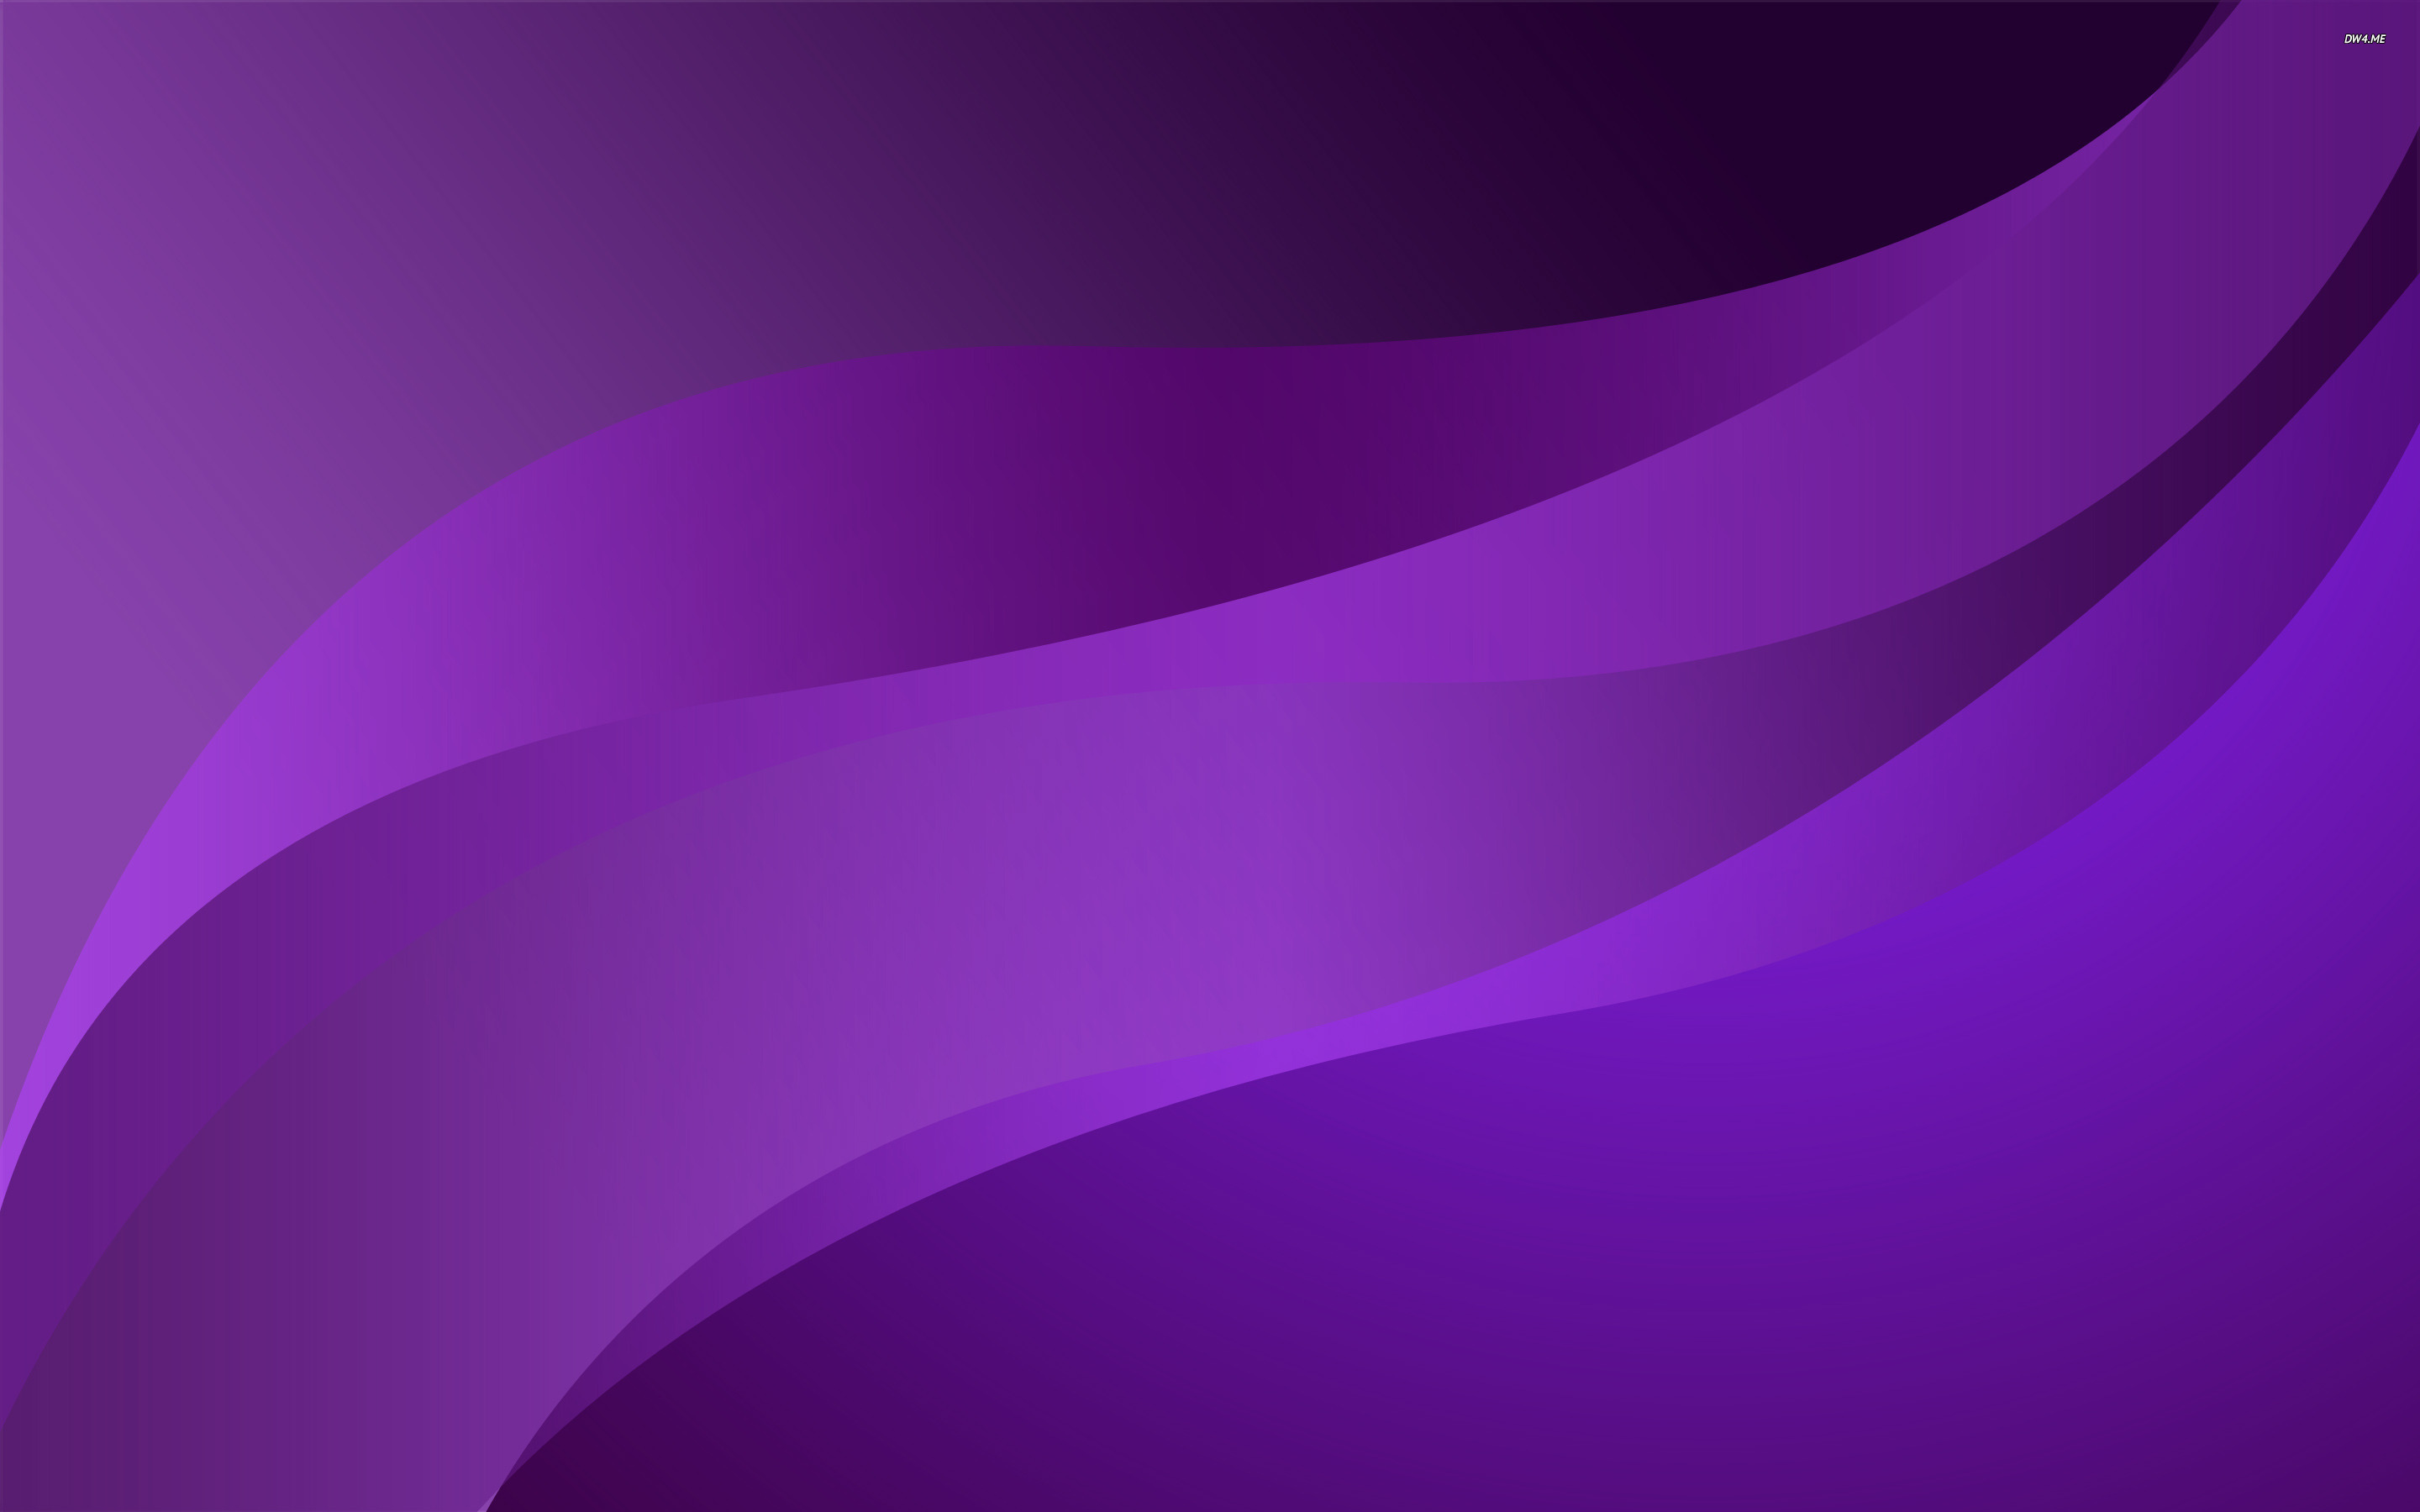 Purple Abstract Wallpaper - WallpaperSafari